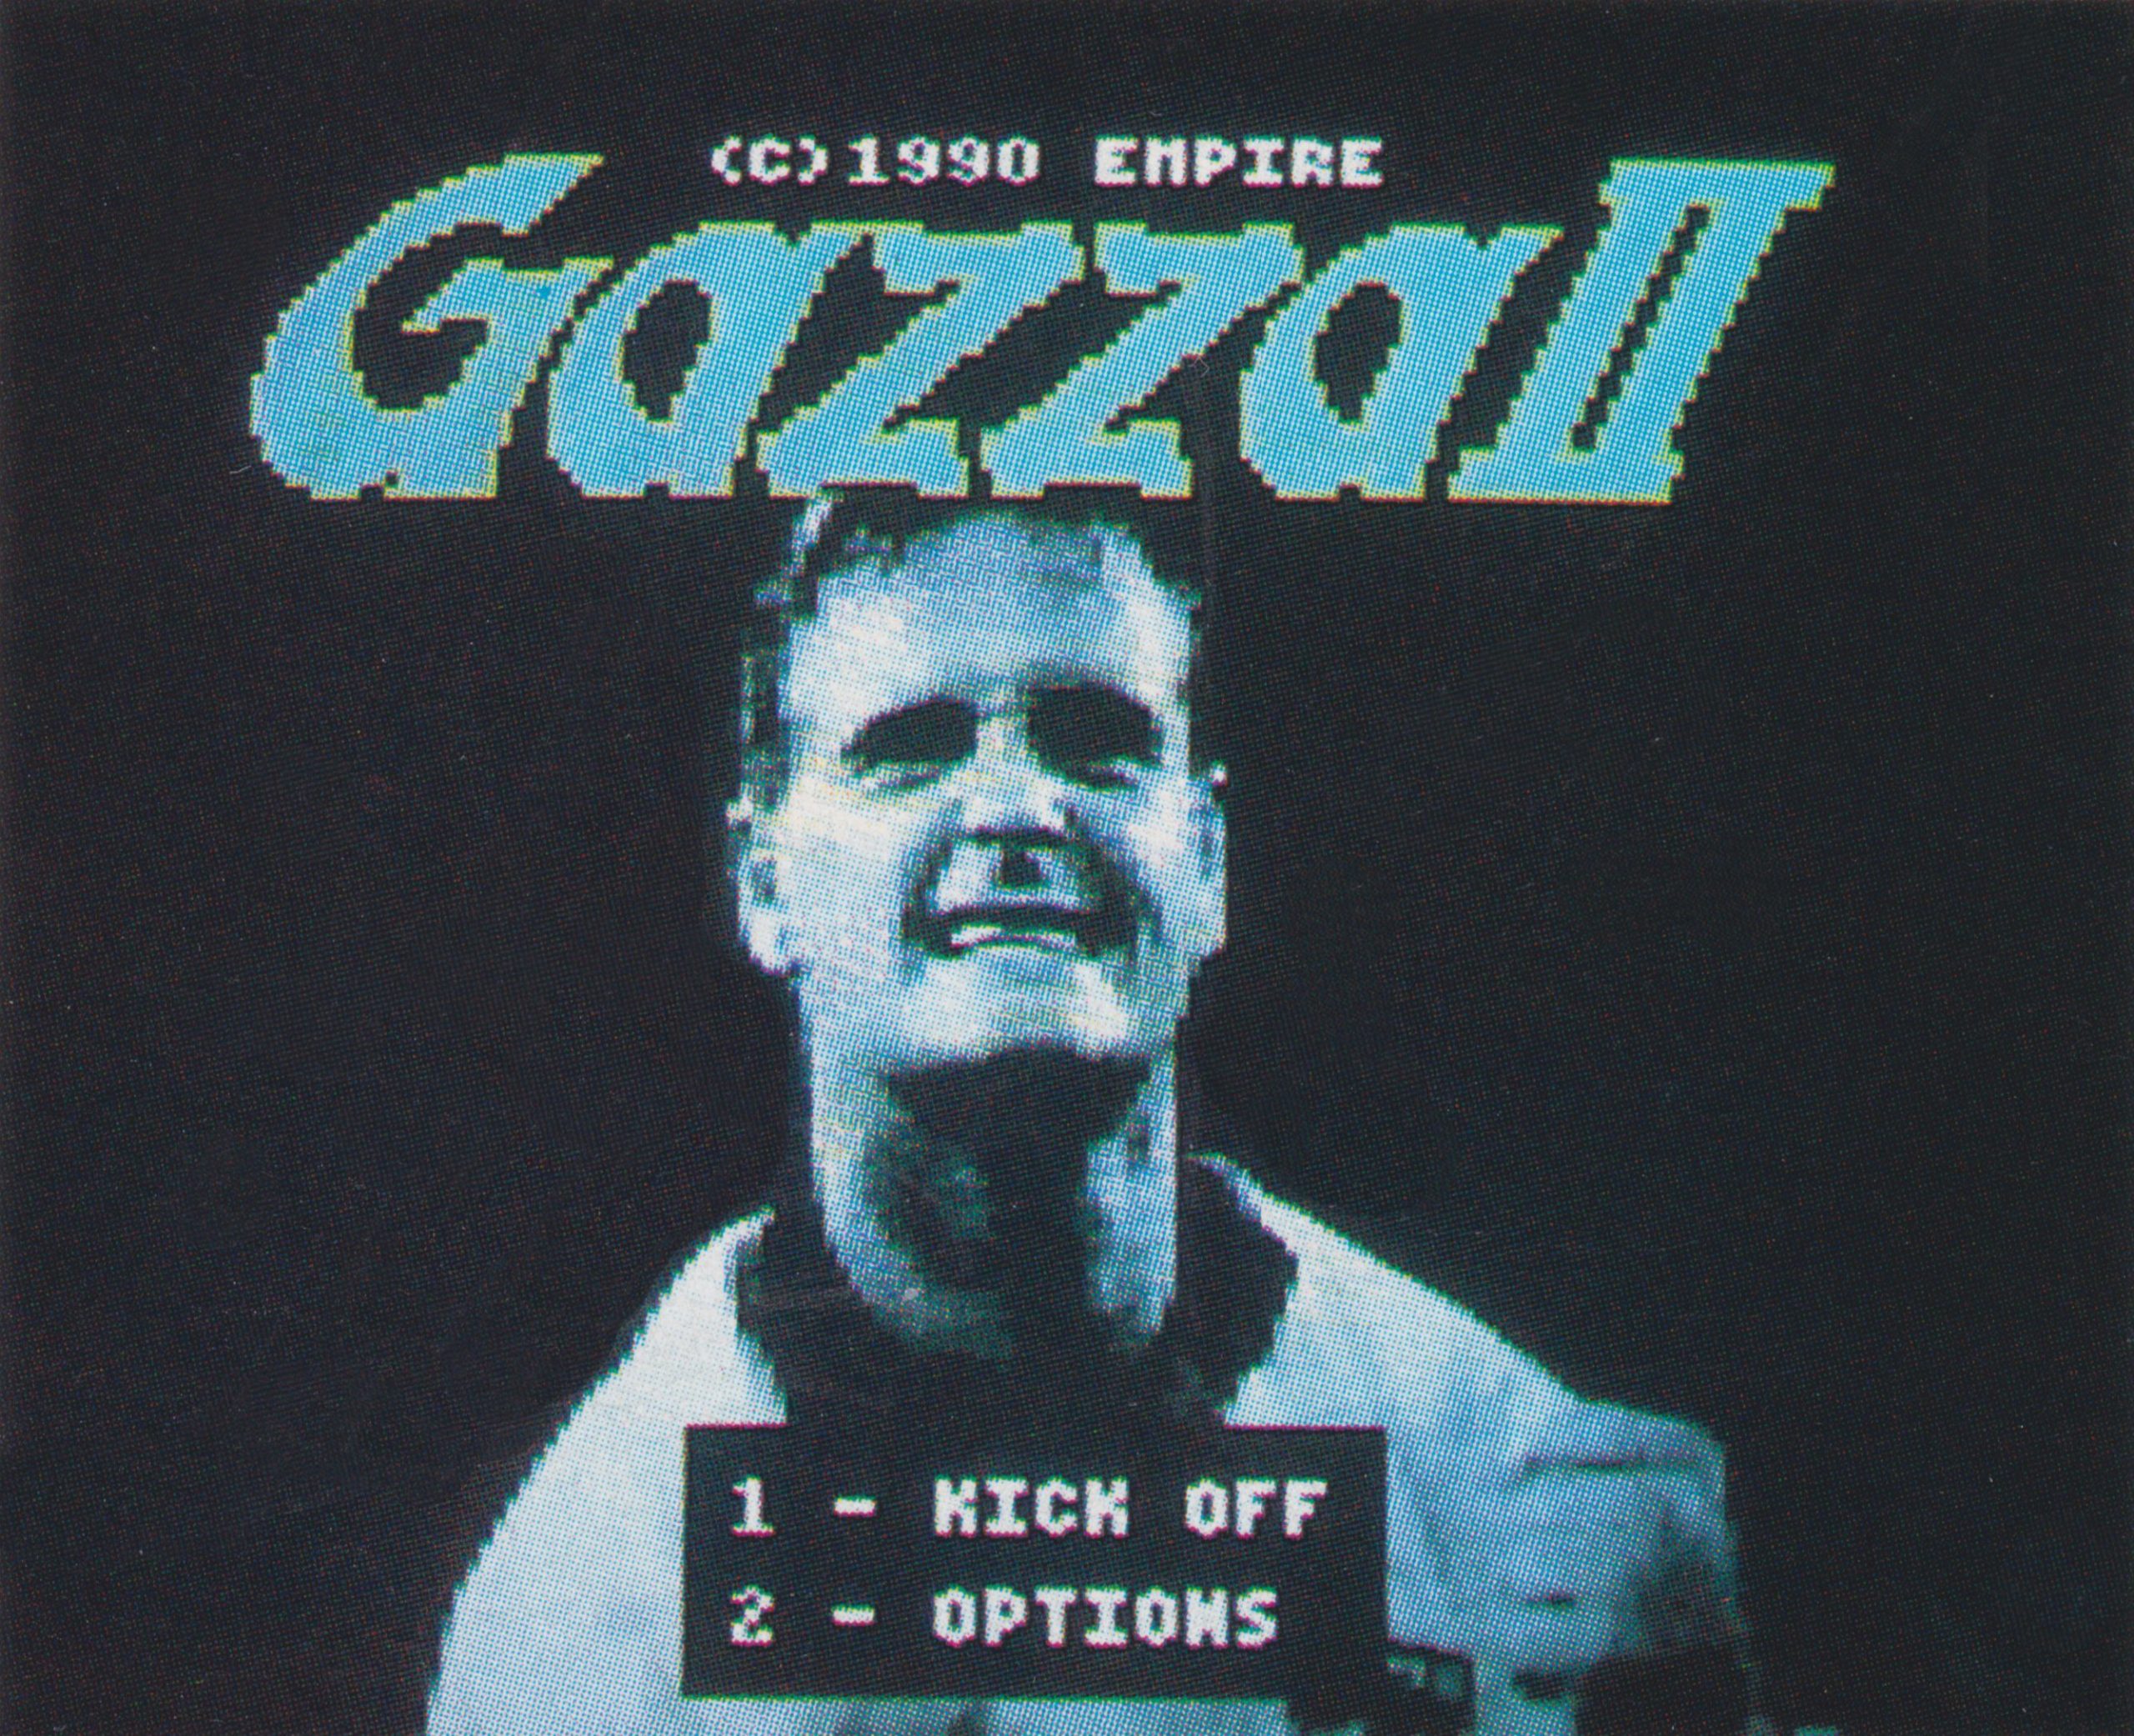 Gazza 2 (Amstrad GX4000) - Games That Weren't